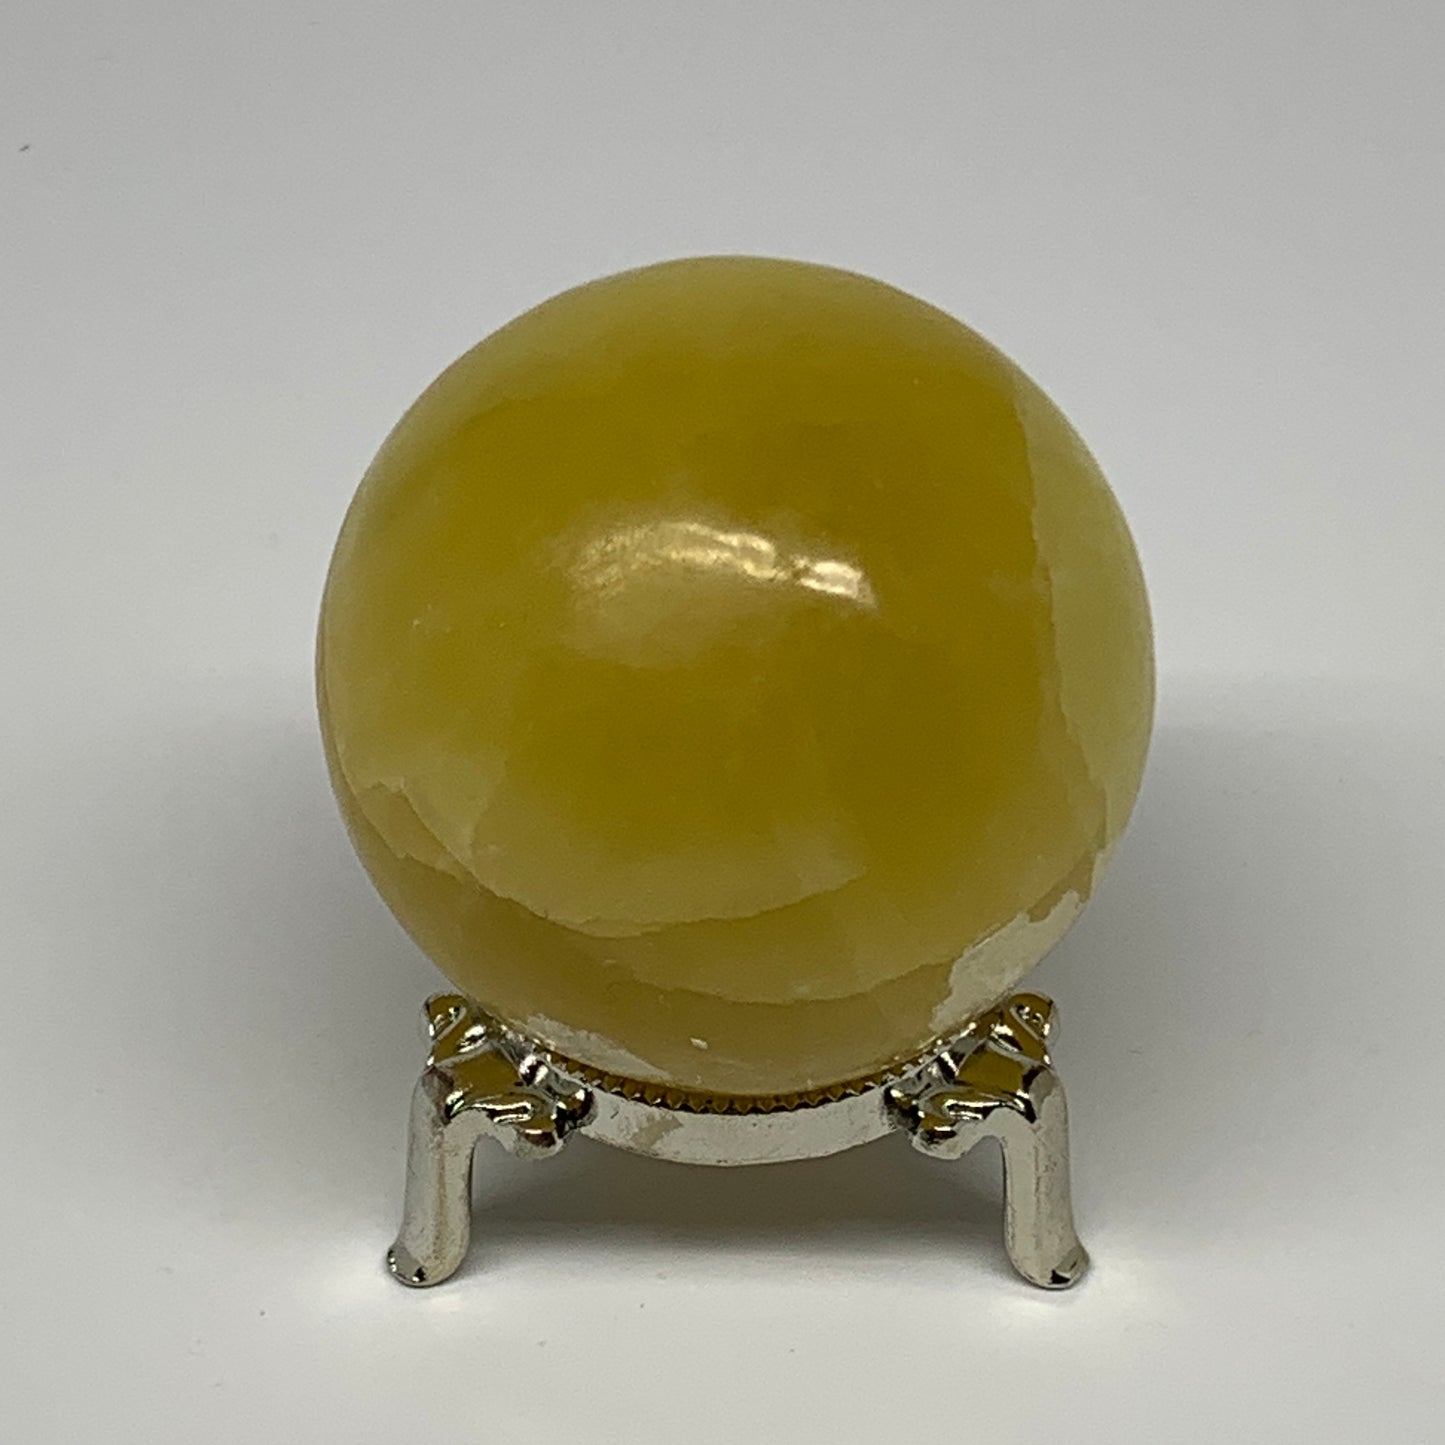 377.9g,2.5"(63mm) Lemon Calcite Sphere Gemstone,Healing Crystal,B26005